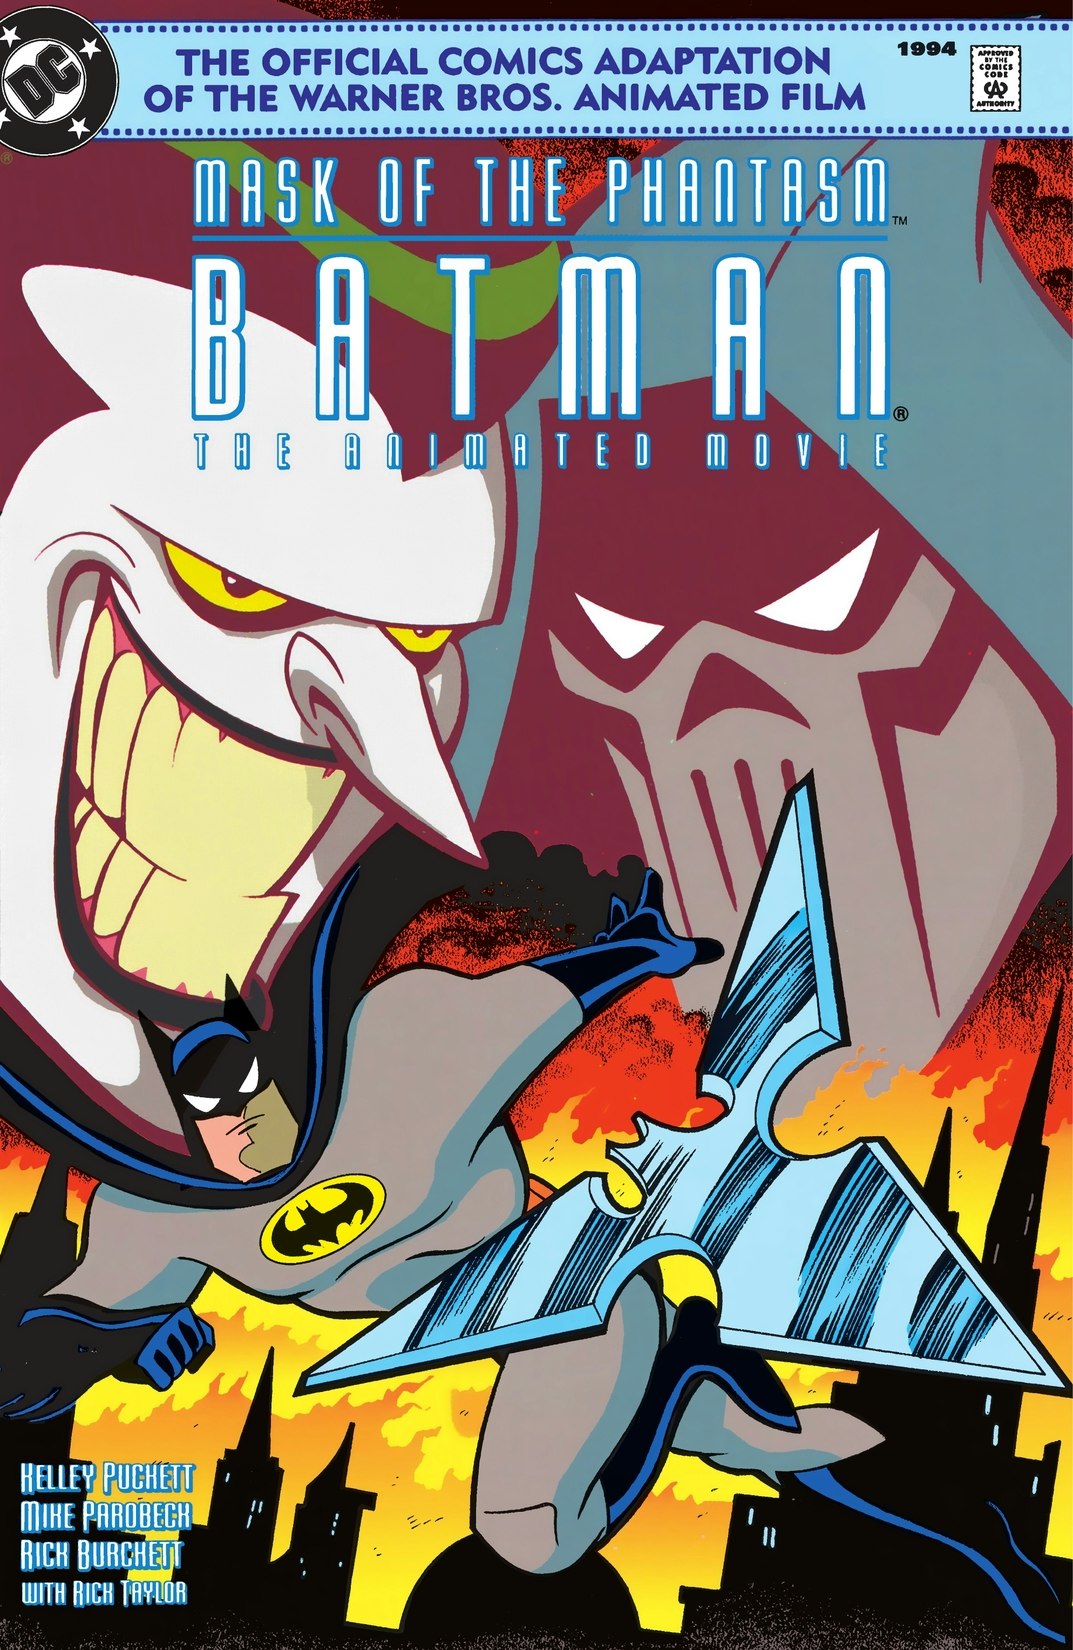 Mask of the phantasm batman comic